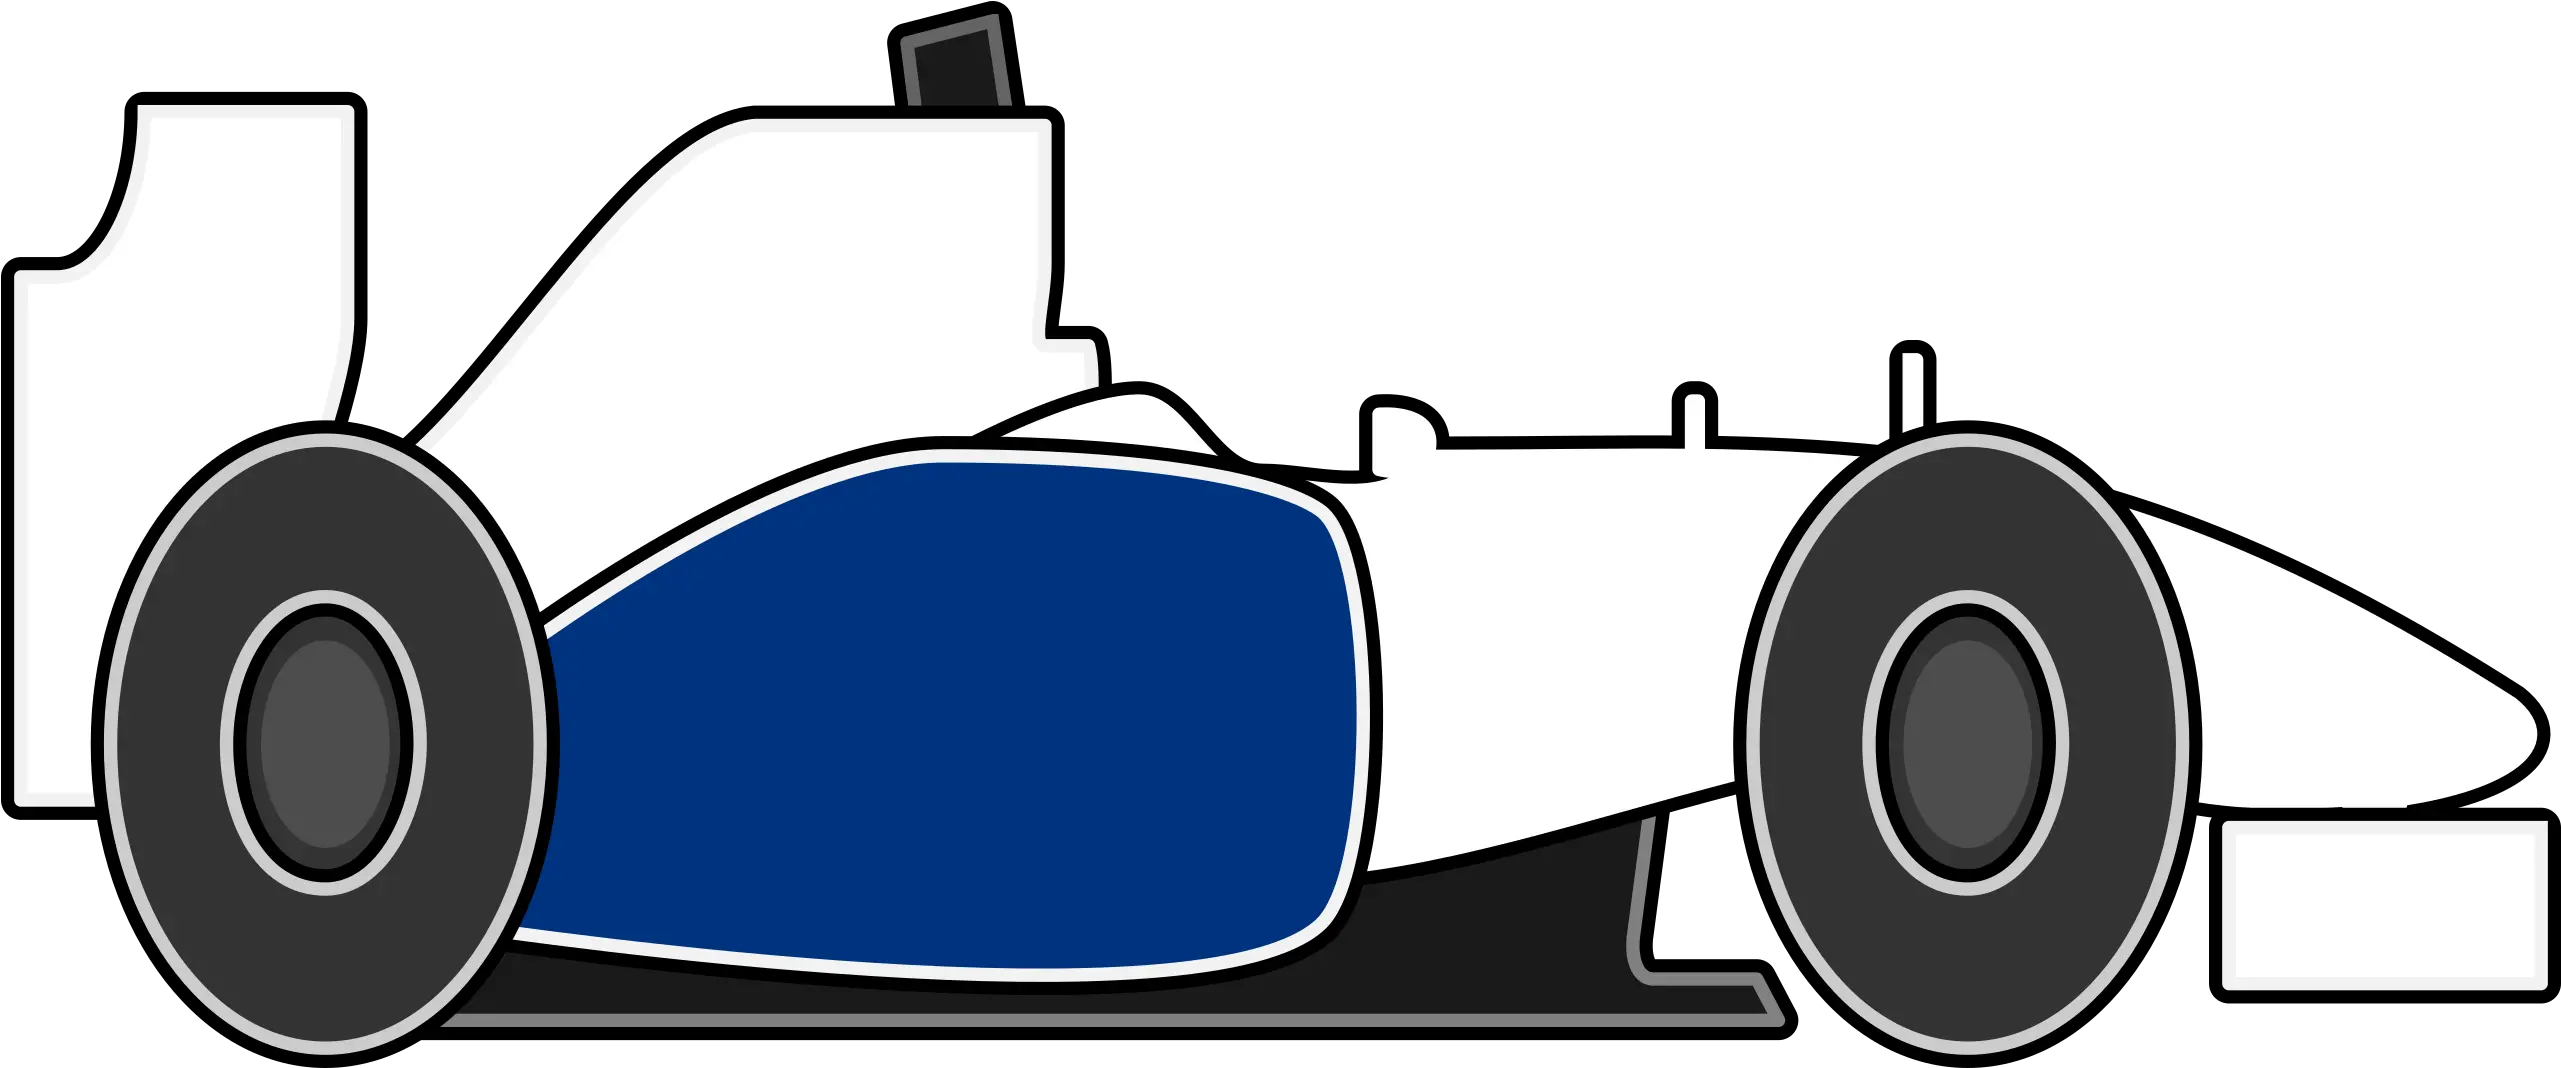 Filef1 Team Icon Bmw Saubersvg Wikimedia Commons F1 Red Bull Icon Png Bmw Car Icon